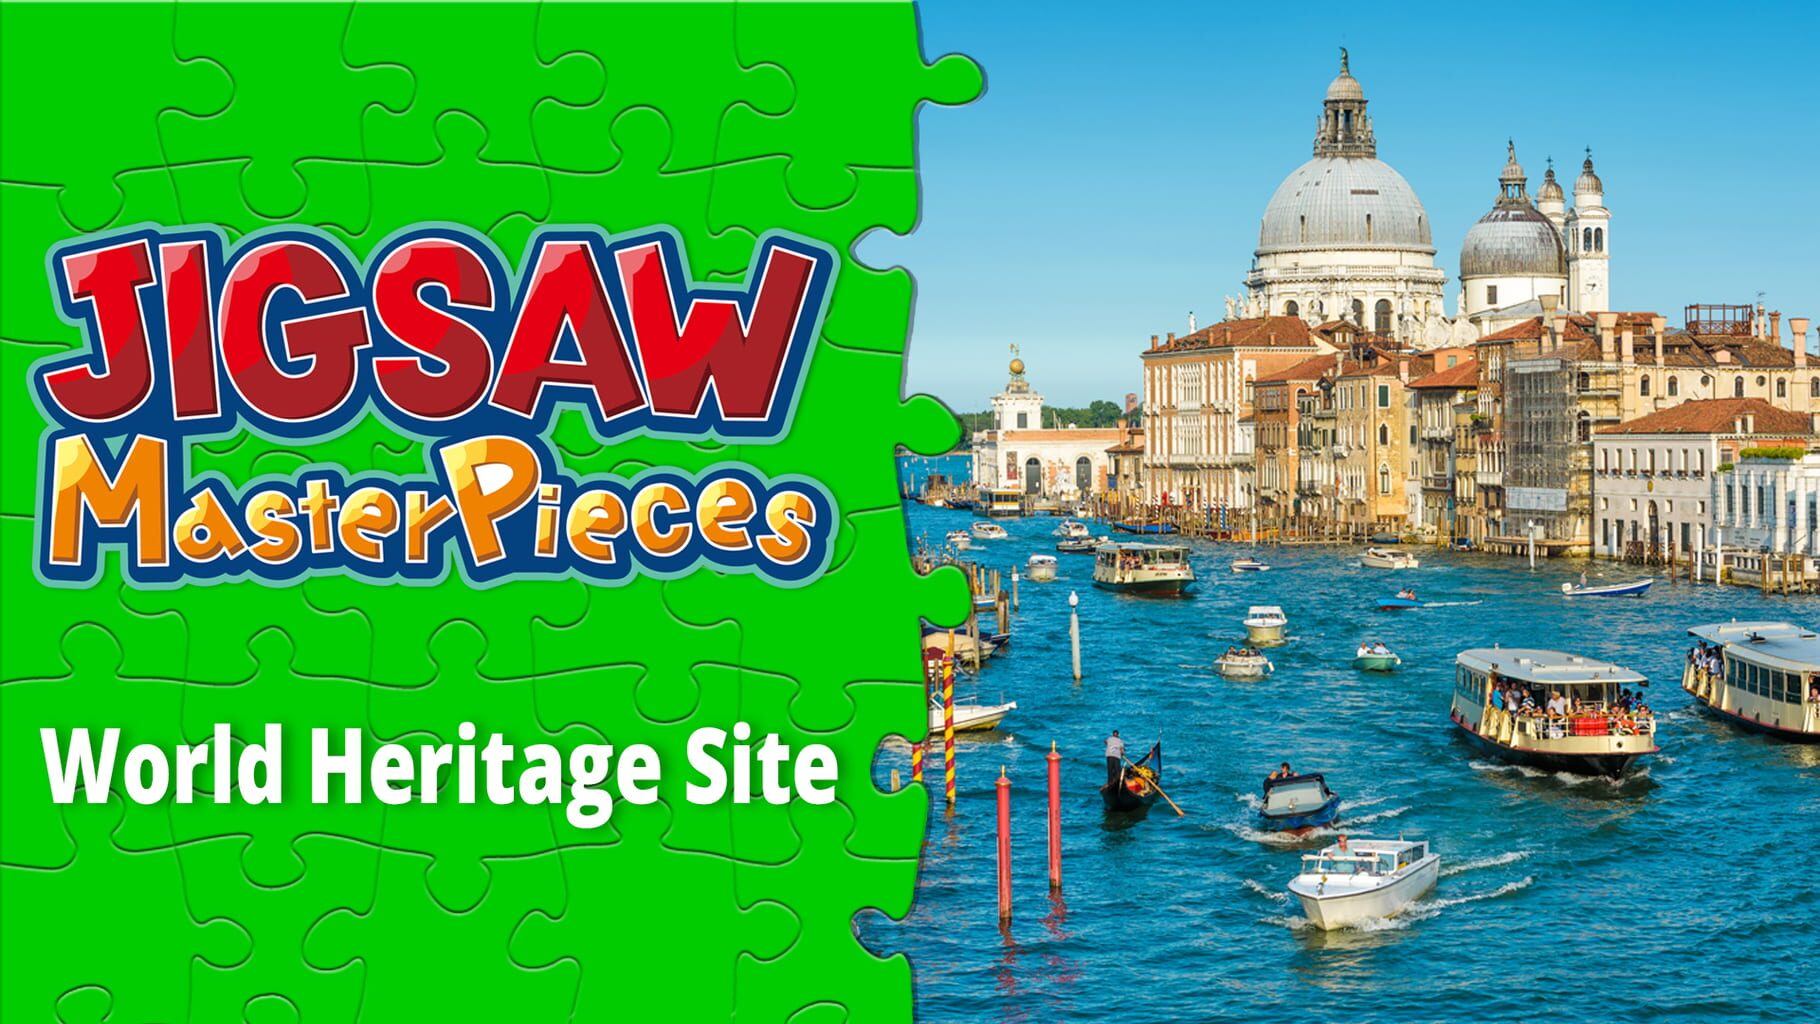 Jigsaw Masterpieces: World Heritage Site artwork